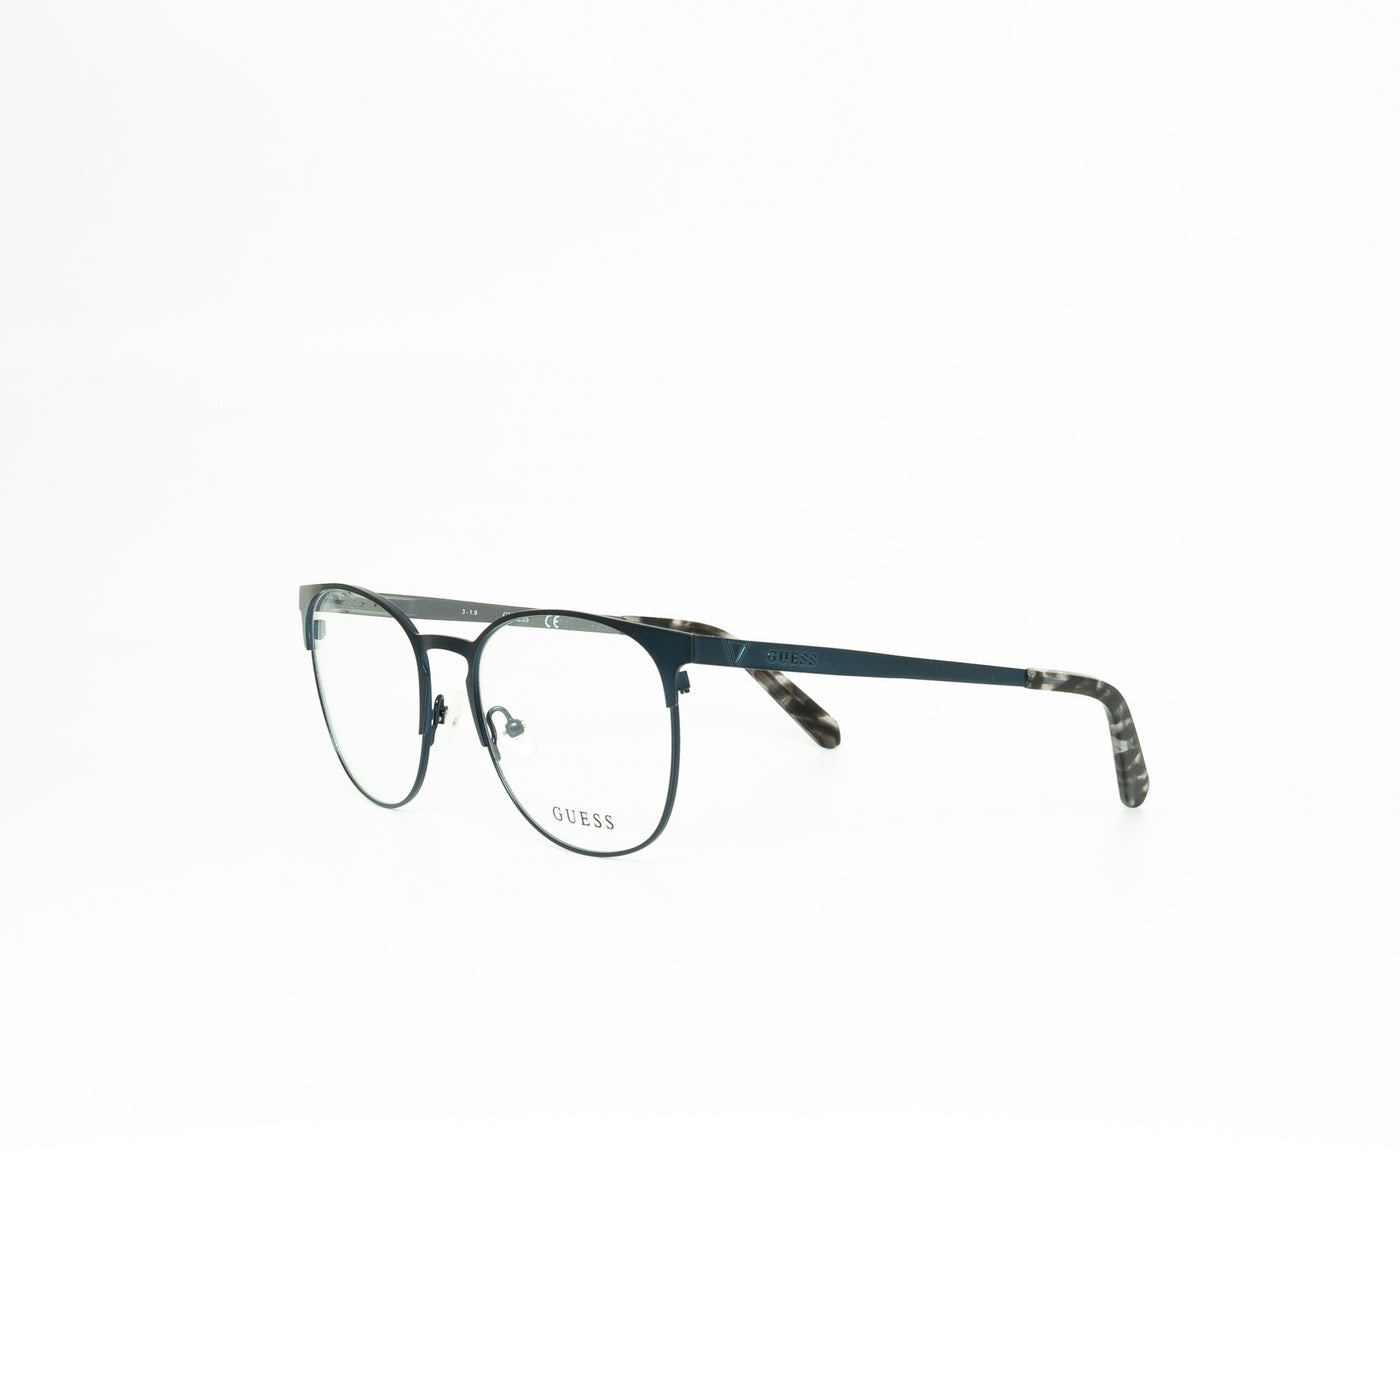 Guess GU1976/091 | Eyeglasses - Vision Express Optical Philippines